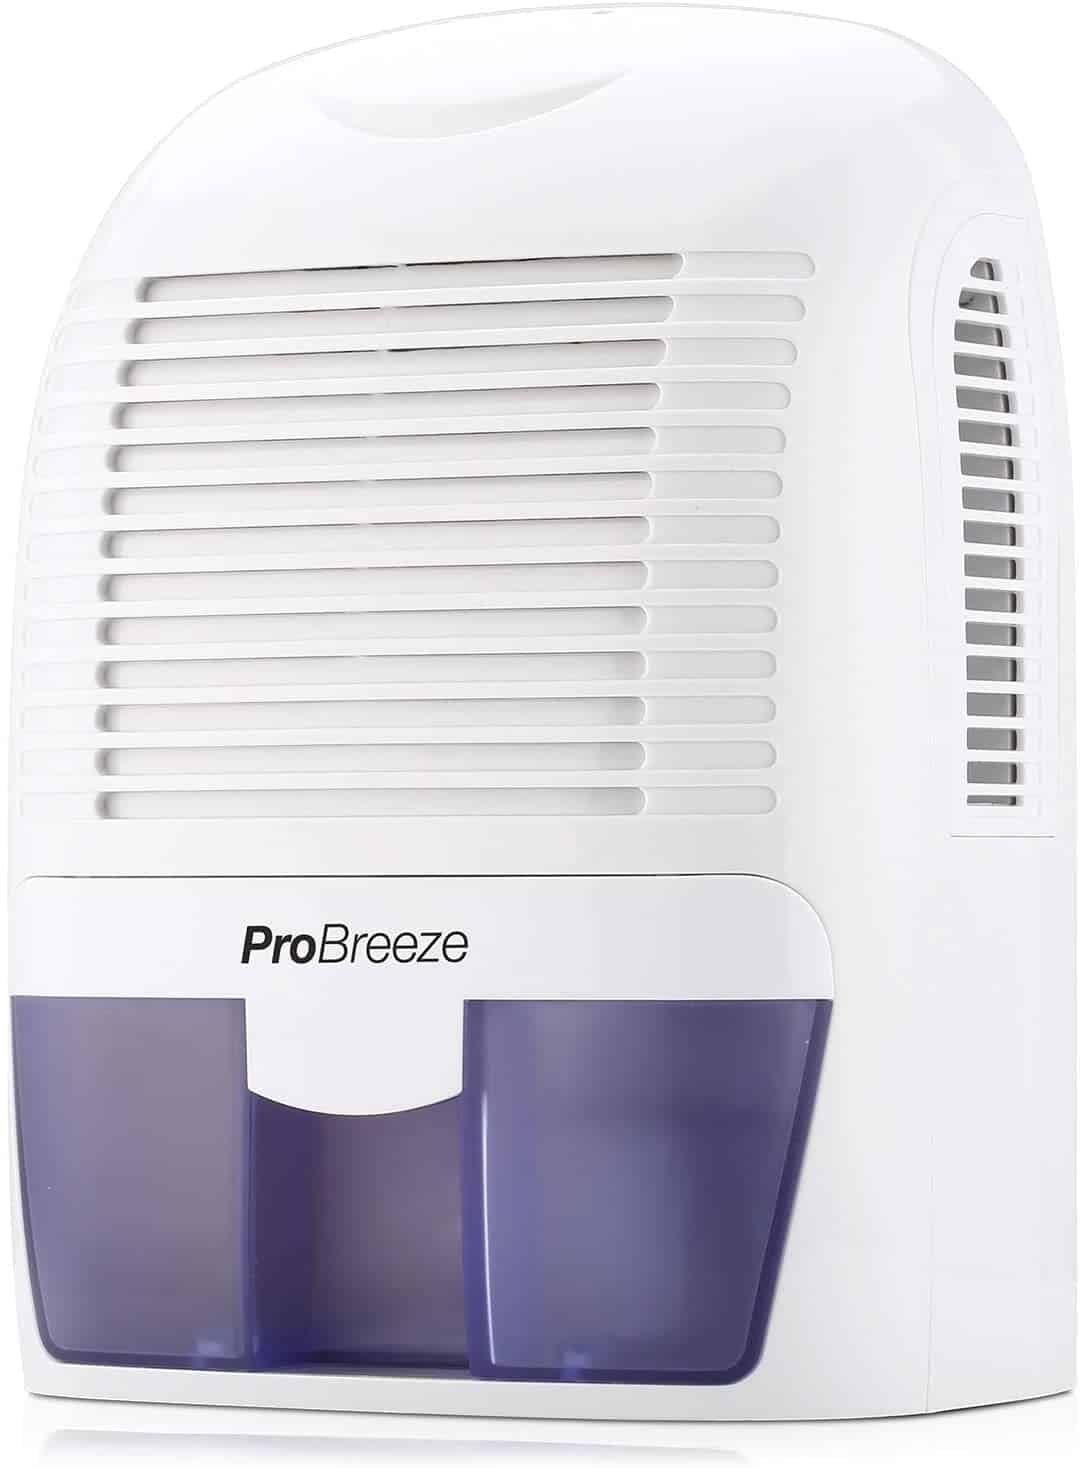 Pro Breeze Electric Dehumidifier